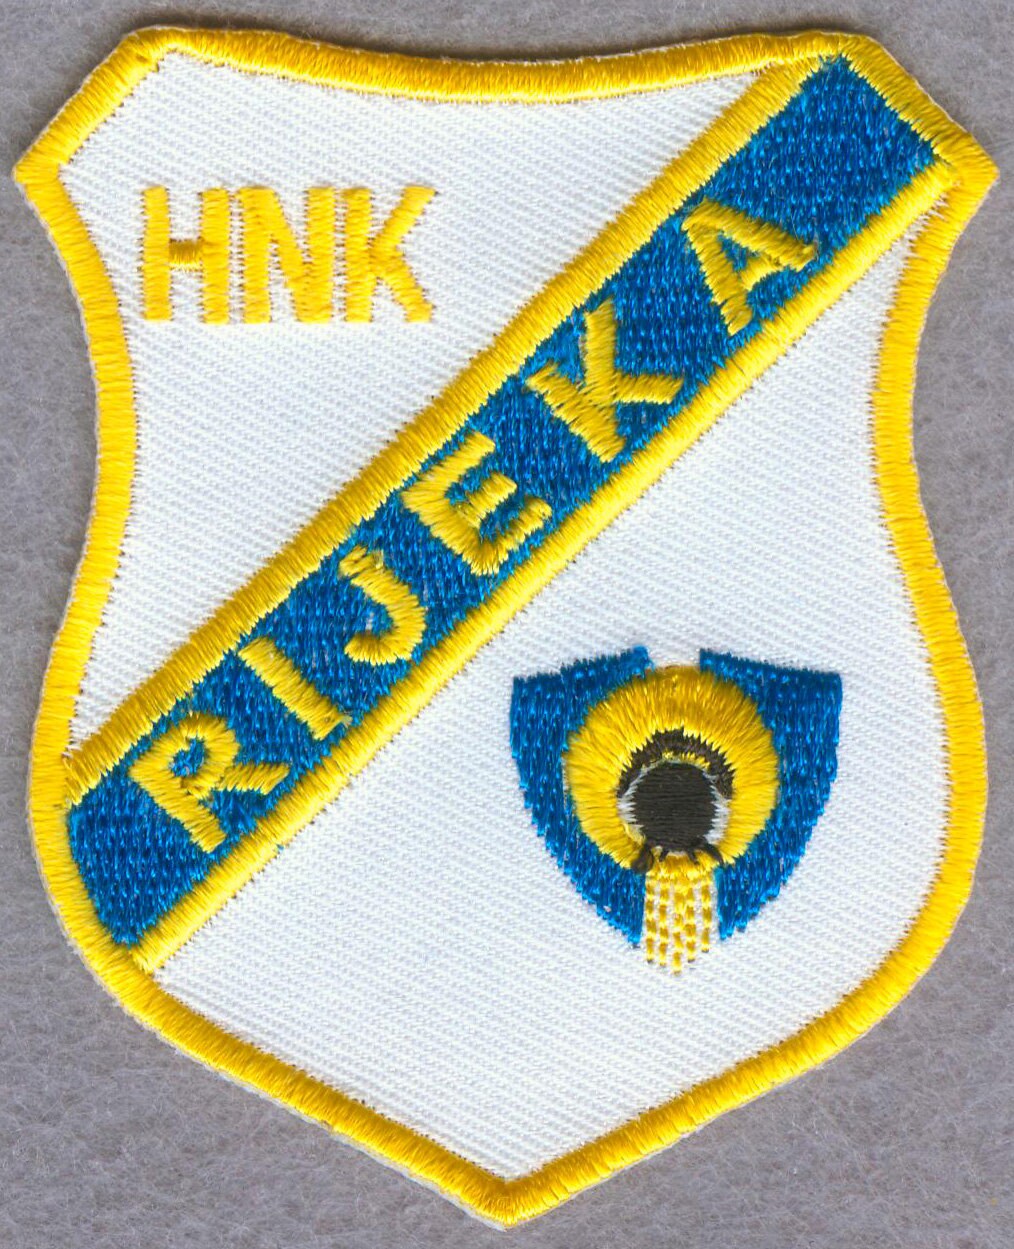 Free: HNK Hajduk Split II GNK Dinamo Zagreb HNK Rijeka - others 